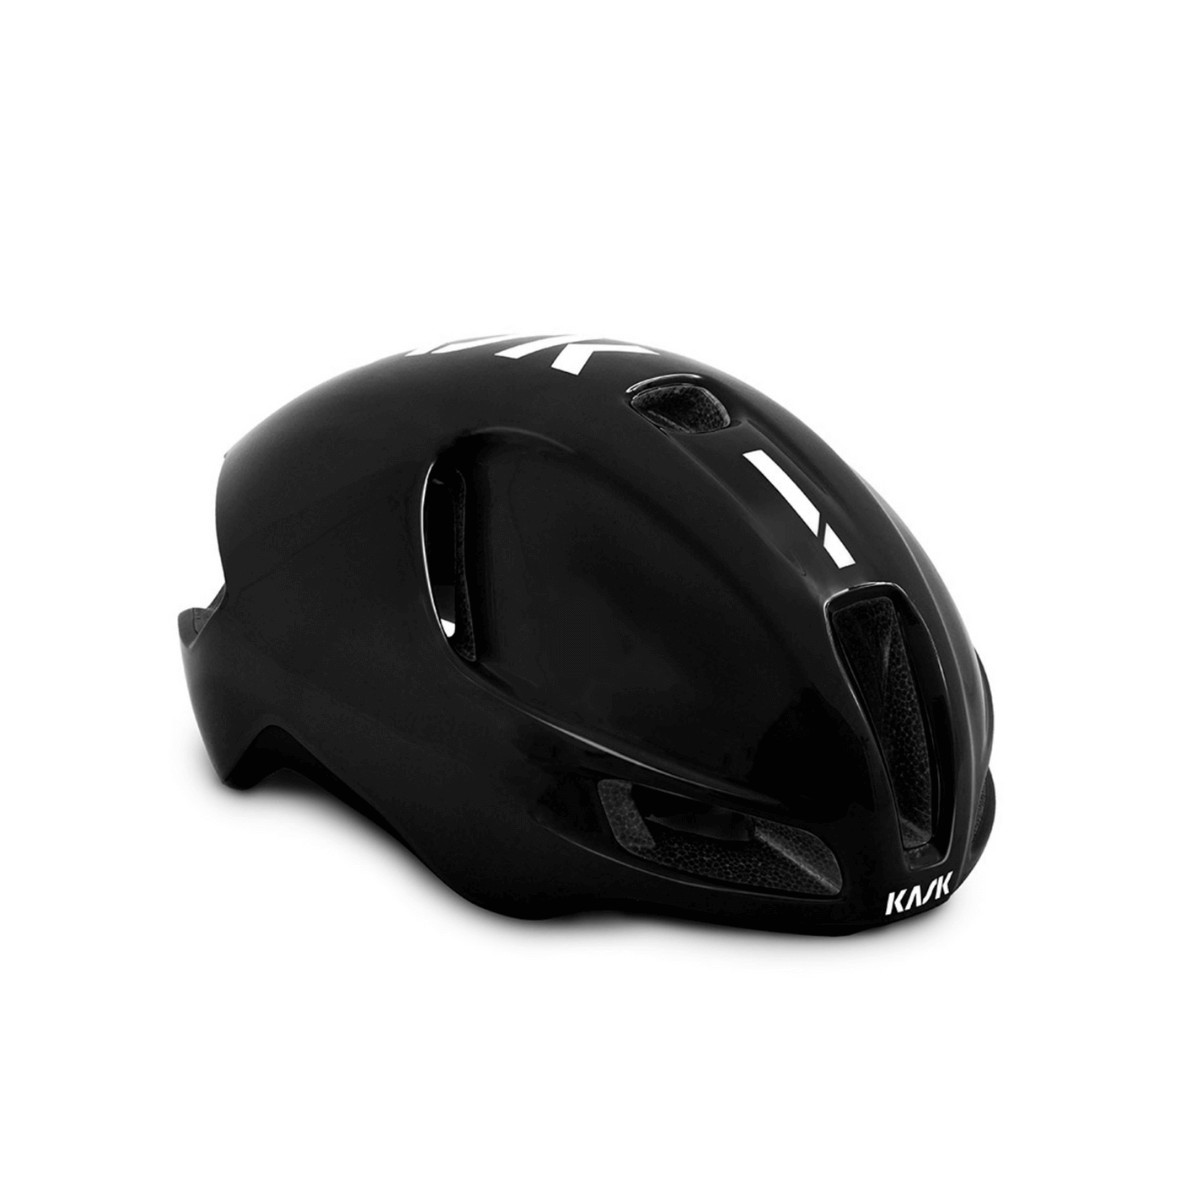 Kask Utopia Helmet Black White, Size M: 52-58